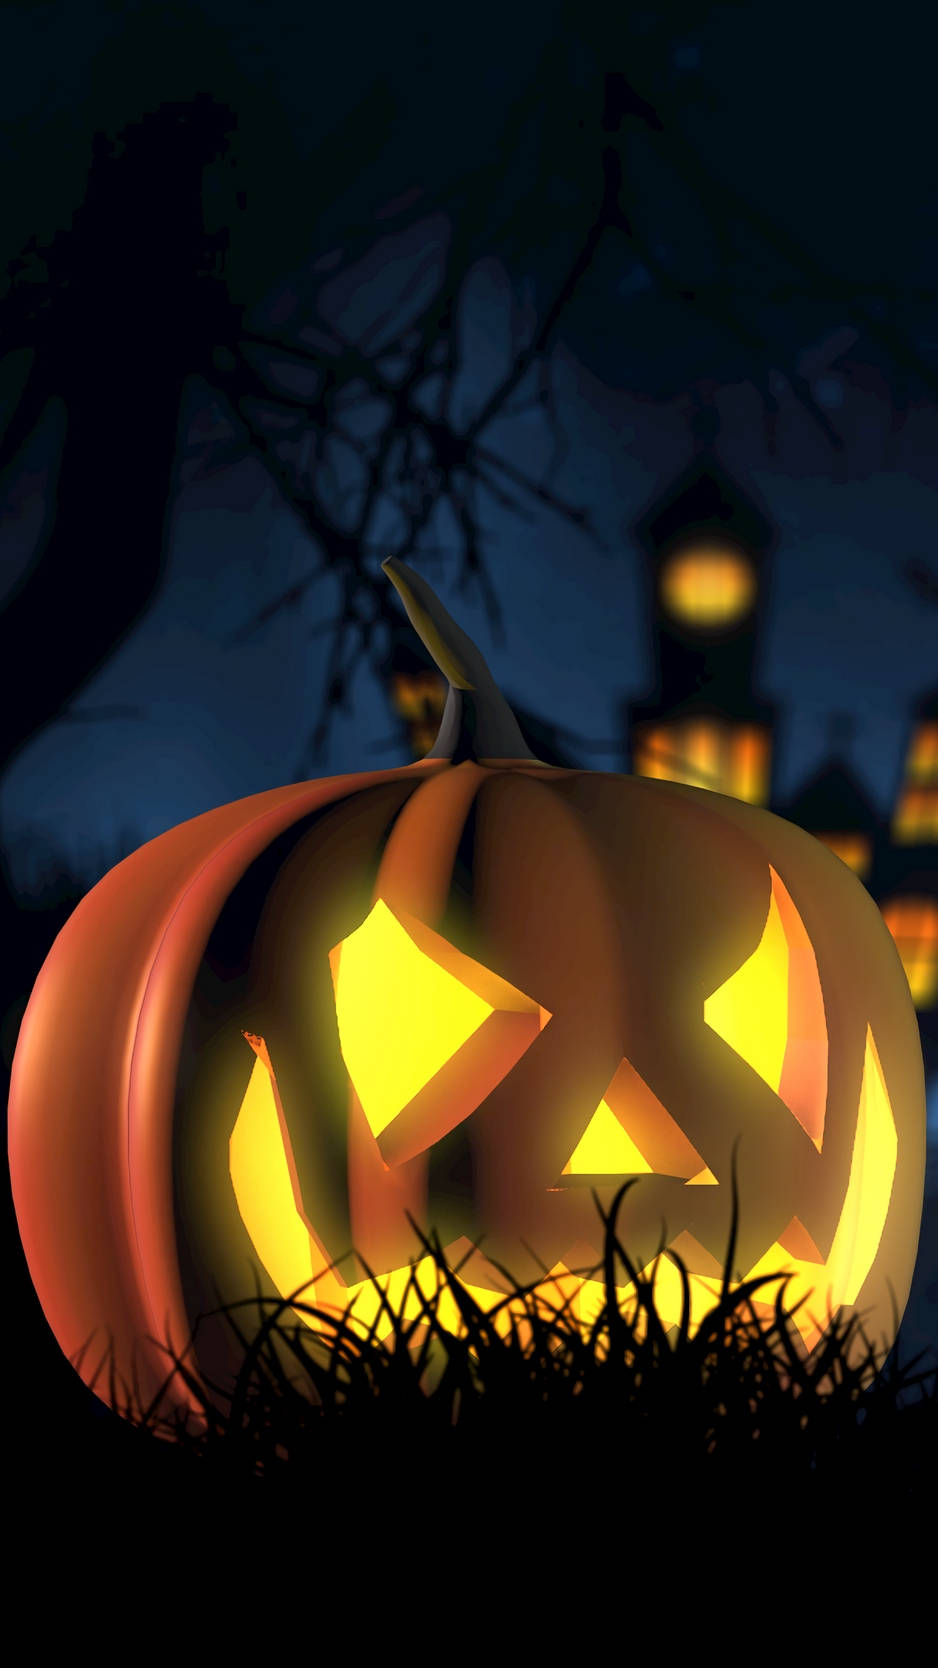 "Happy Halloween – Enjoy this carved pumpkin!" Wallpaper